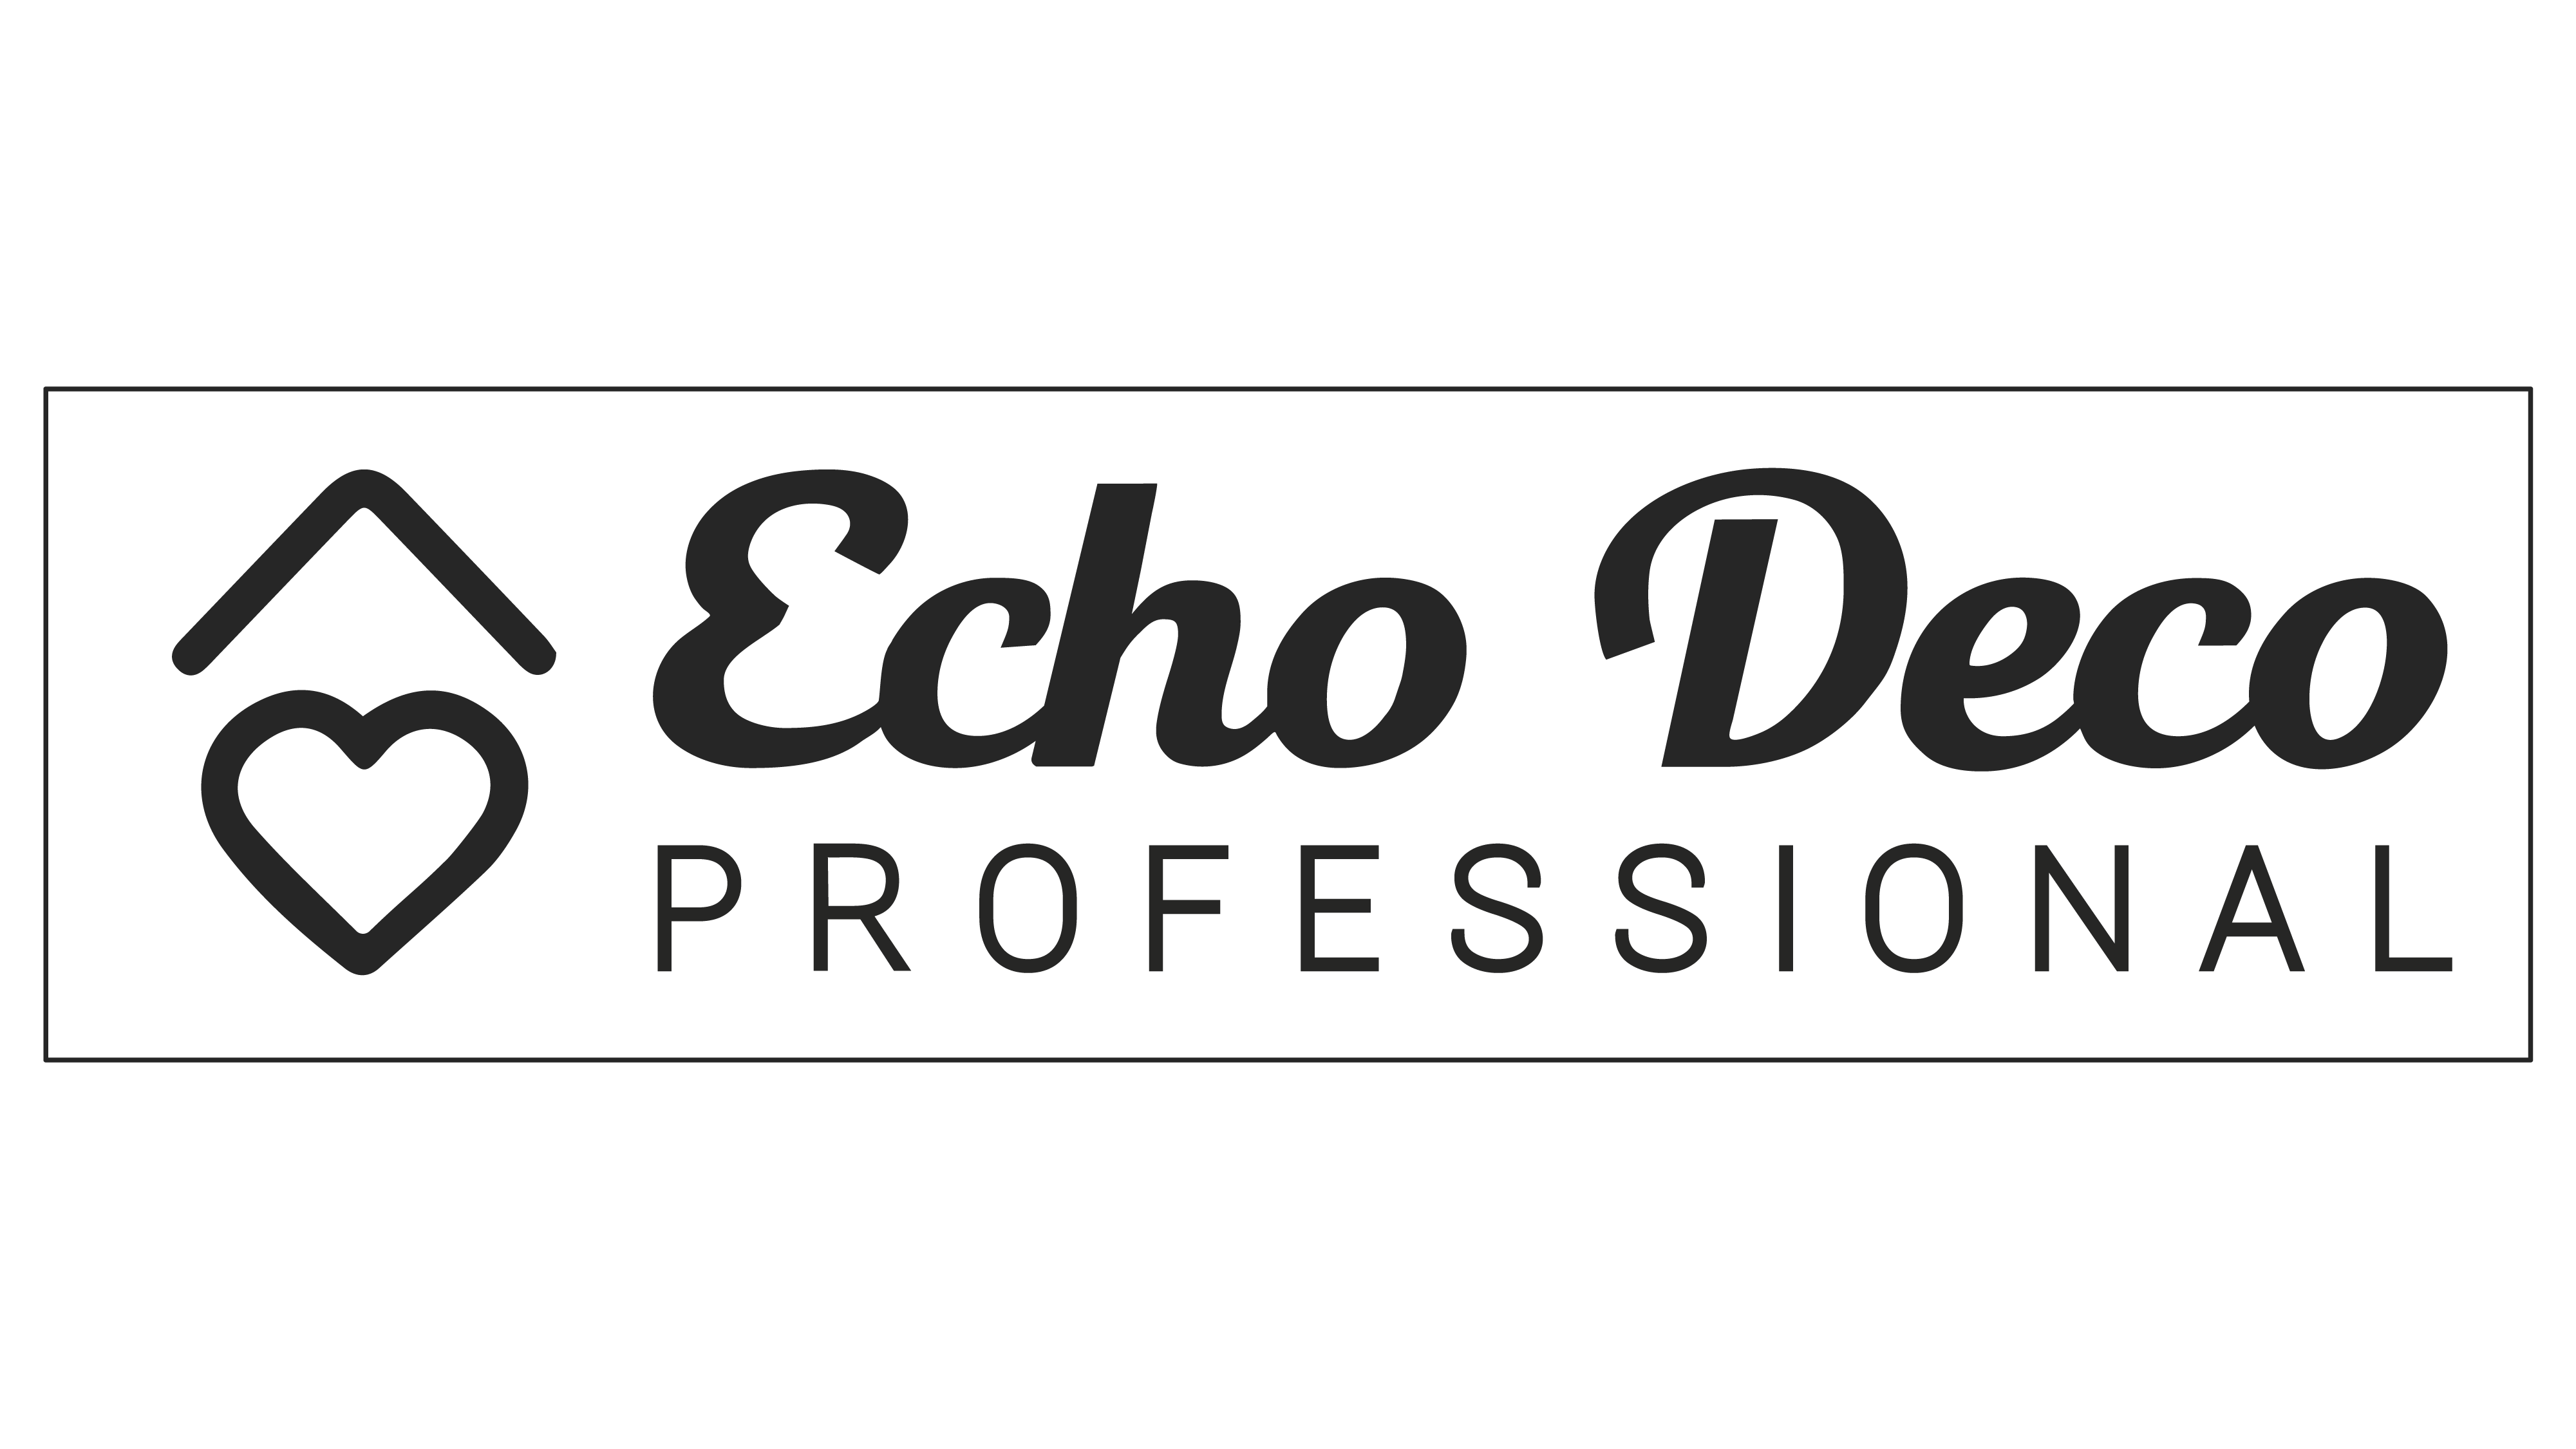 EchoDeco Professional